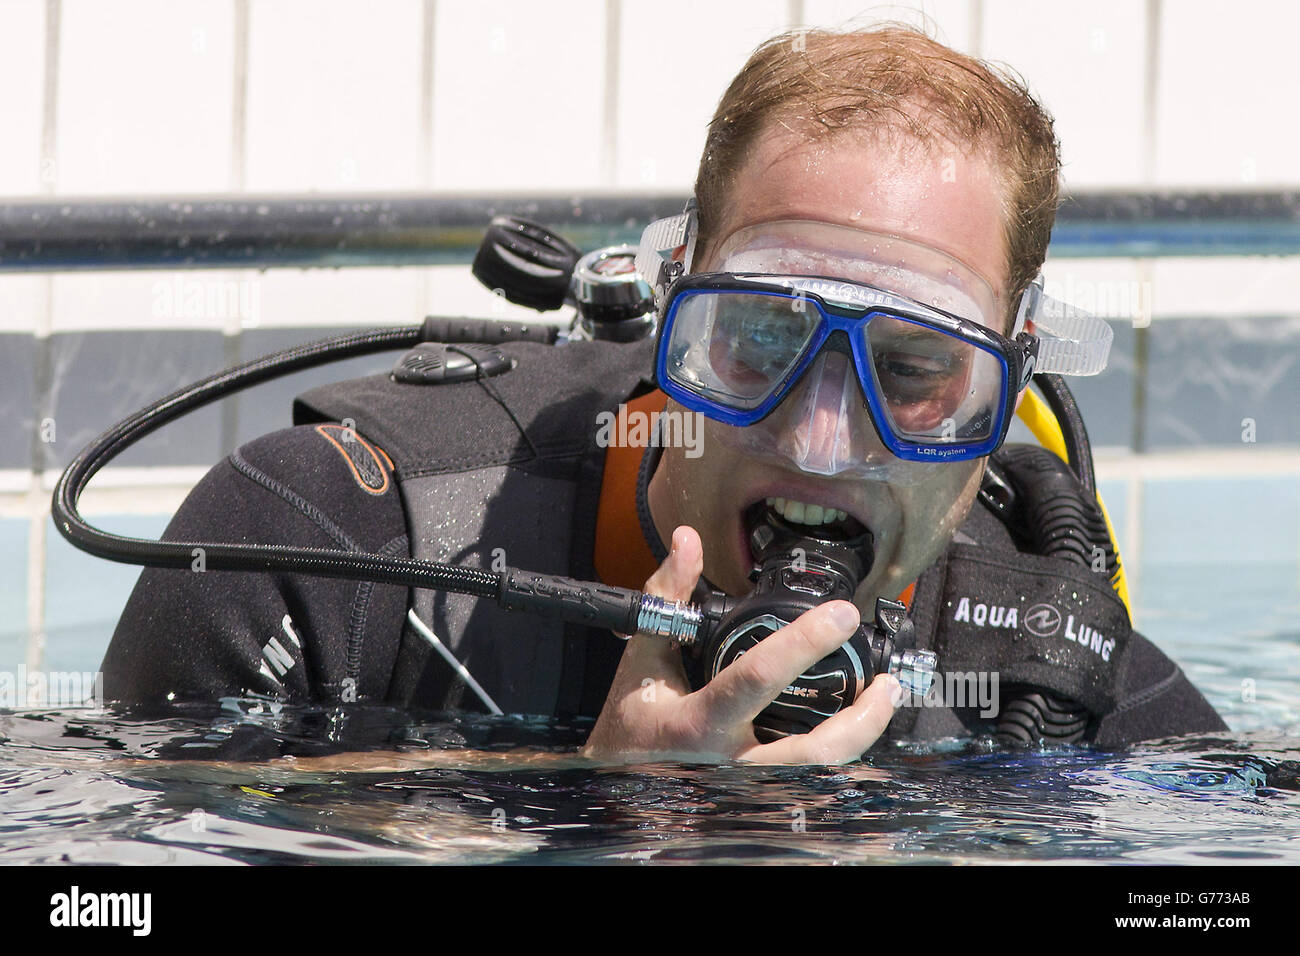 The Duke of Cambridge scuba dives with British Sub-Aqua Club (BSAC) members at a swimming pool in London. Stock Photo